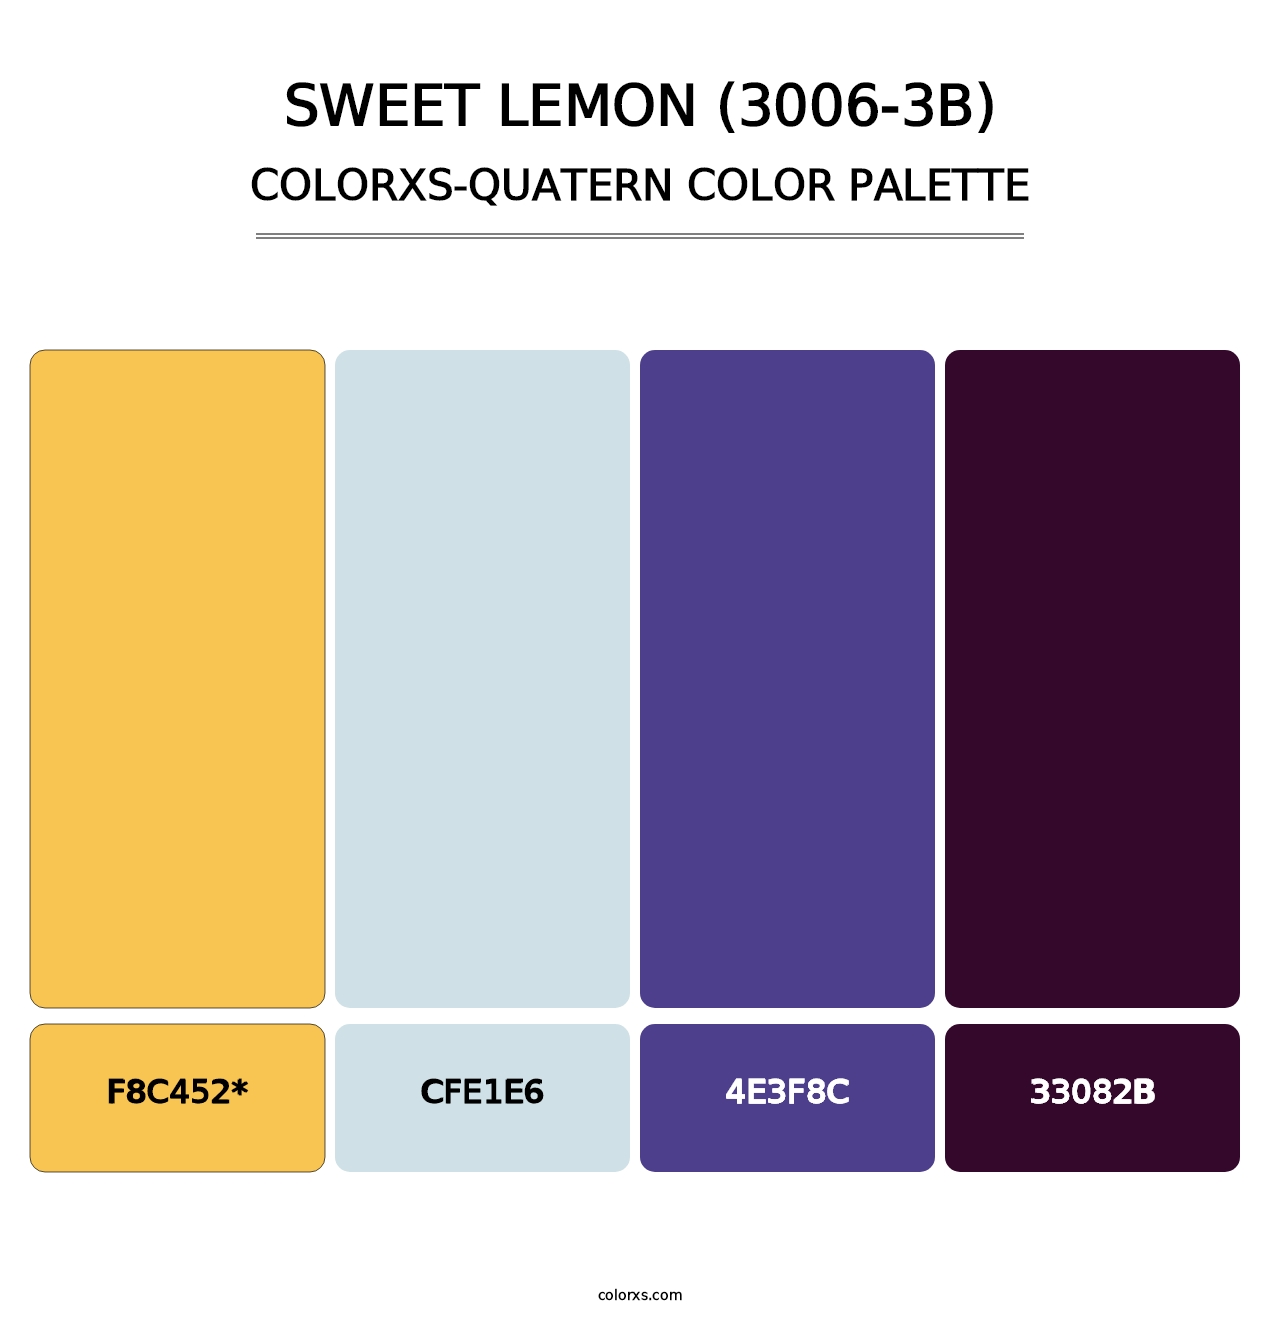 Sweet Lemon (3006-3B) - Colorxs Quatern Palette